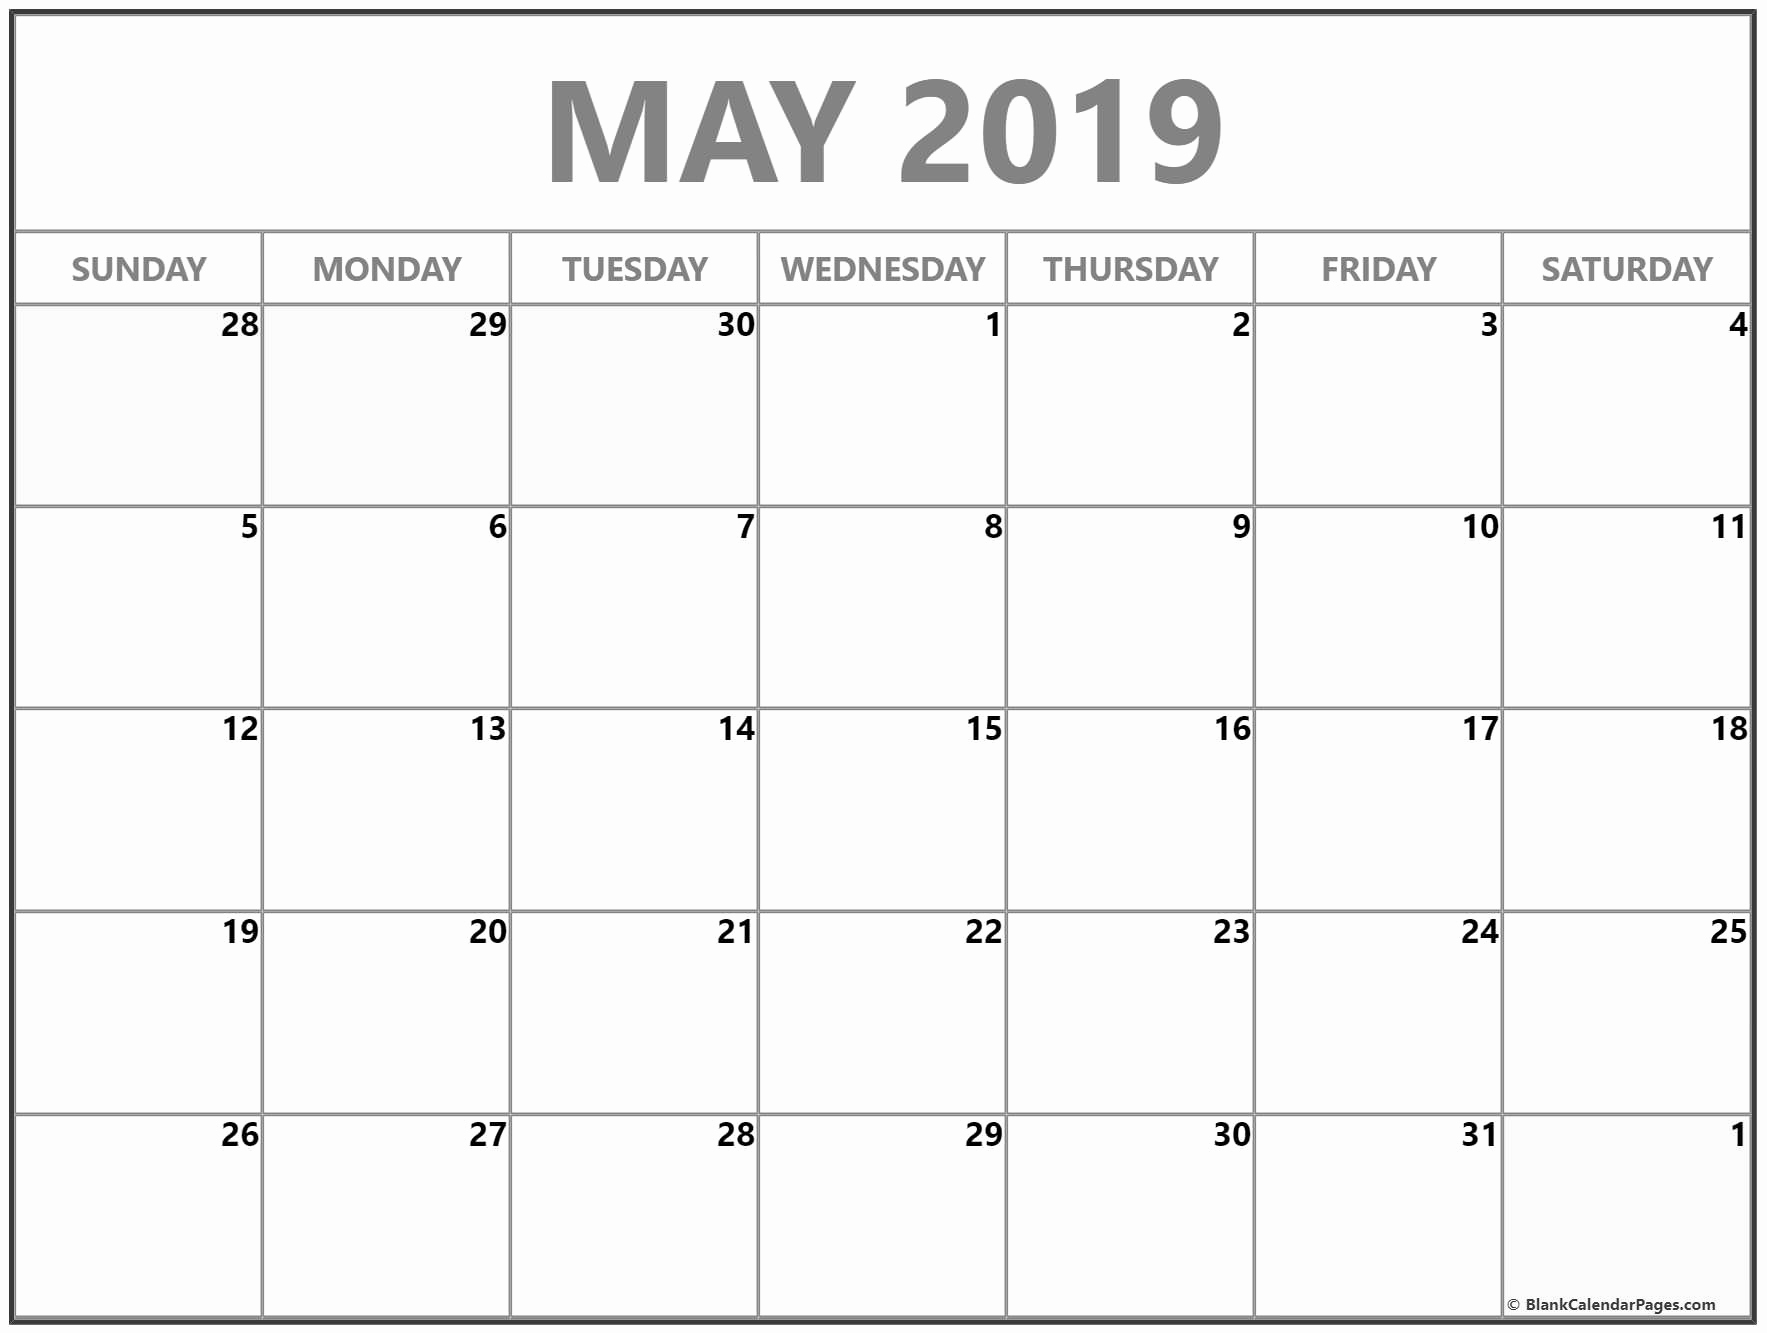 Blank Calendar Template 2019 Awesome May 2019 Blank Calendar Templates